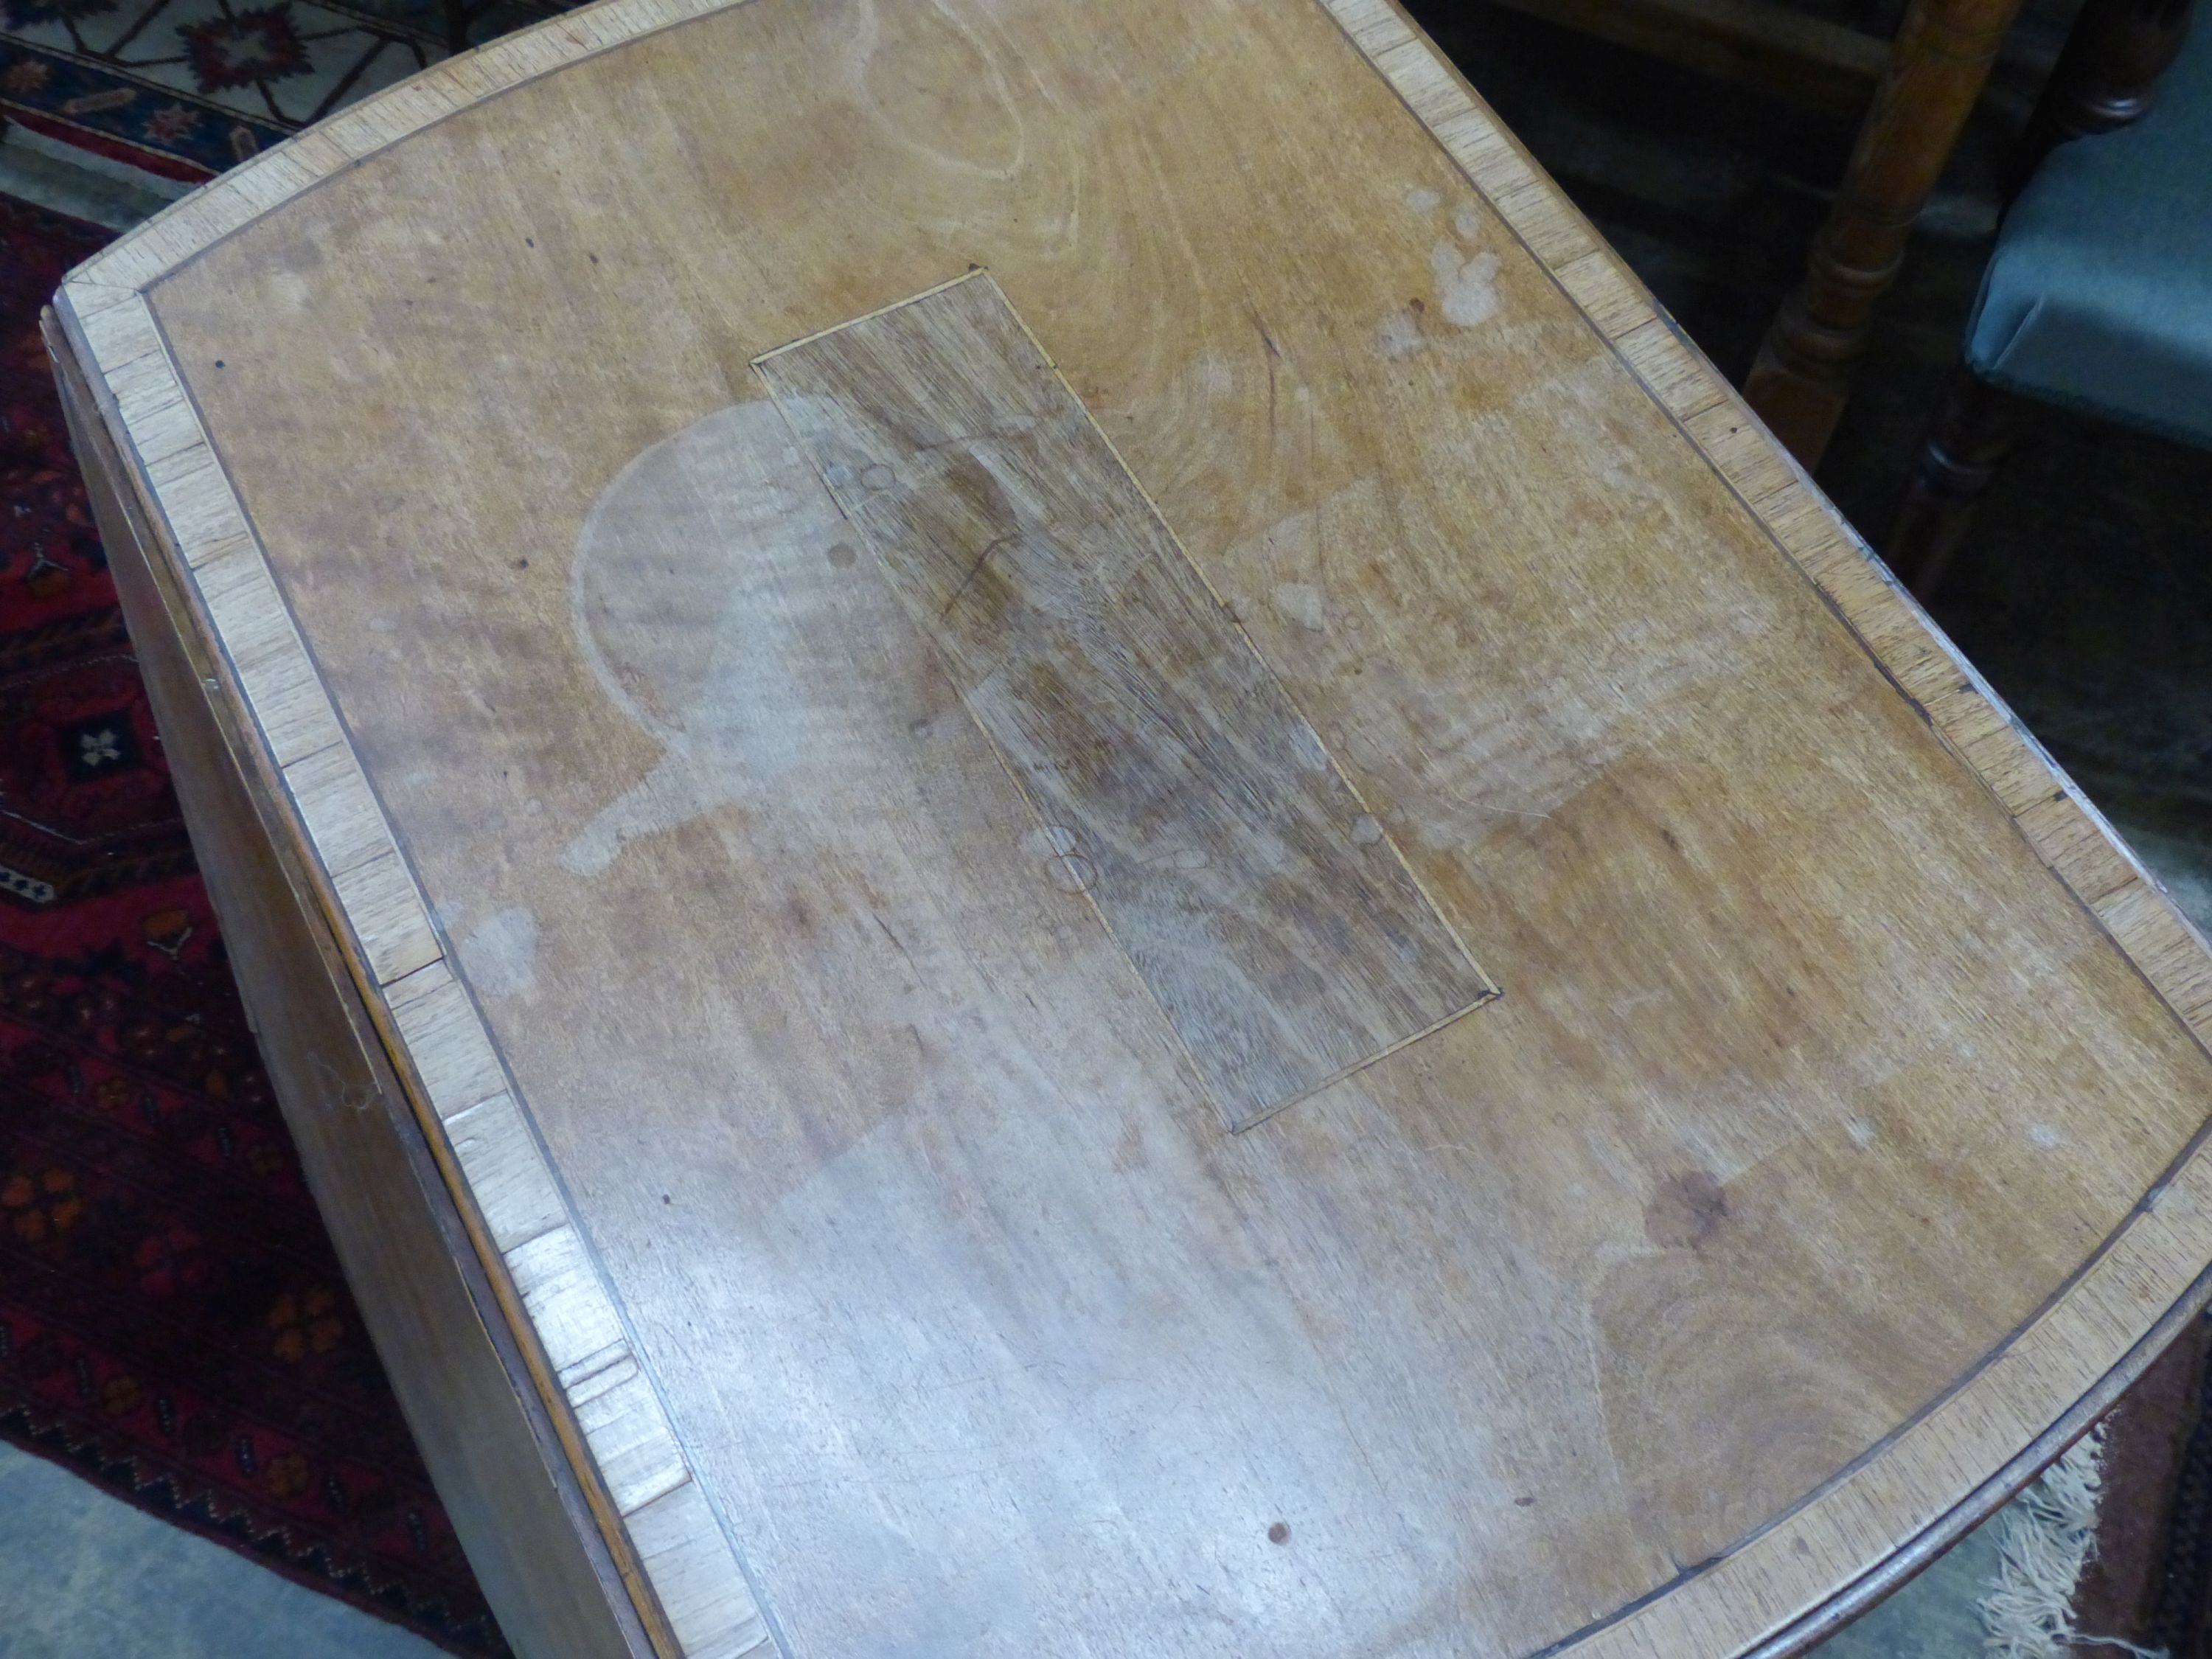 A George III mahogany oval pembroke table